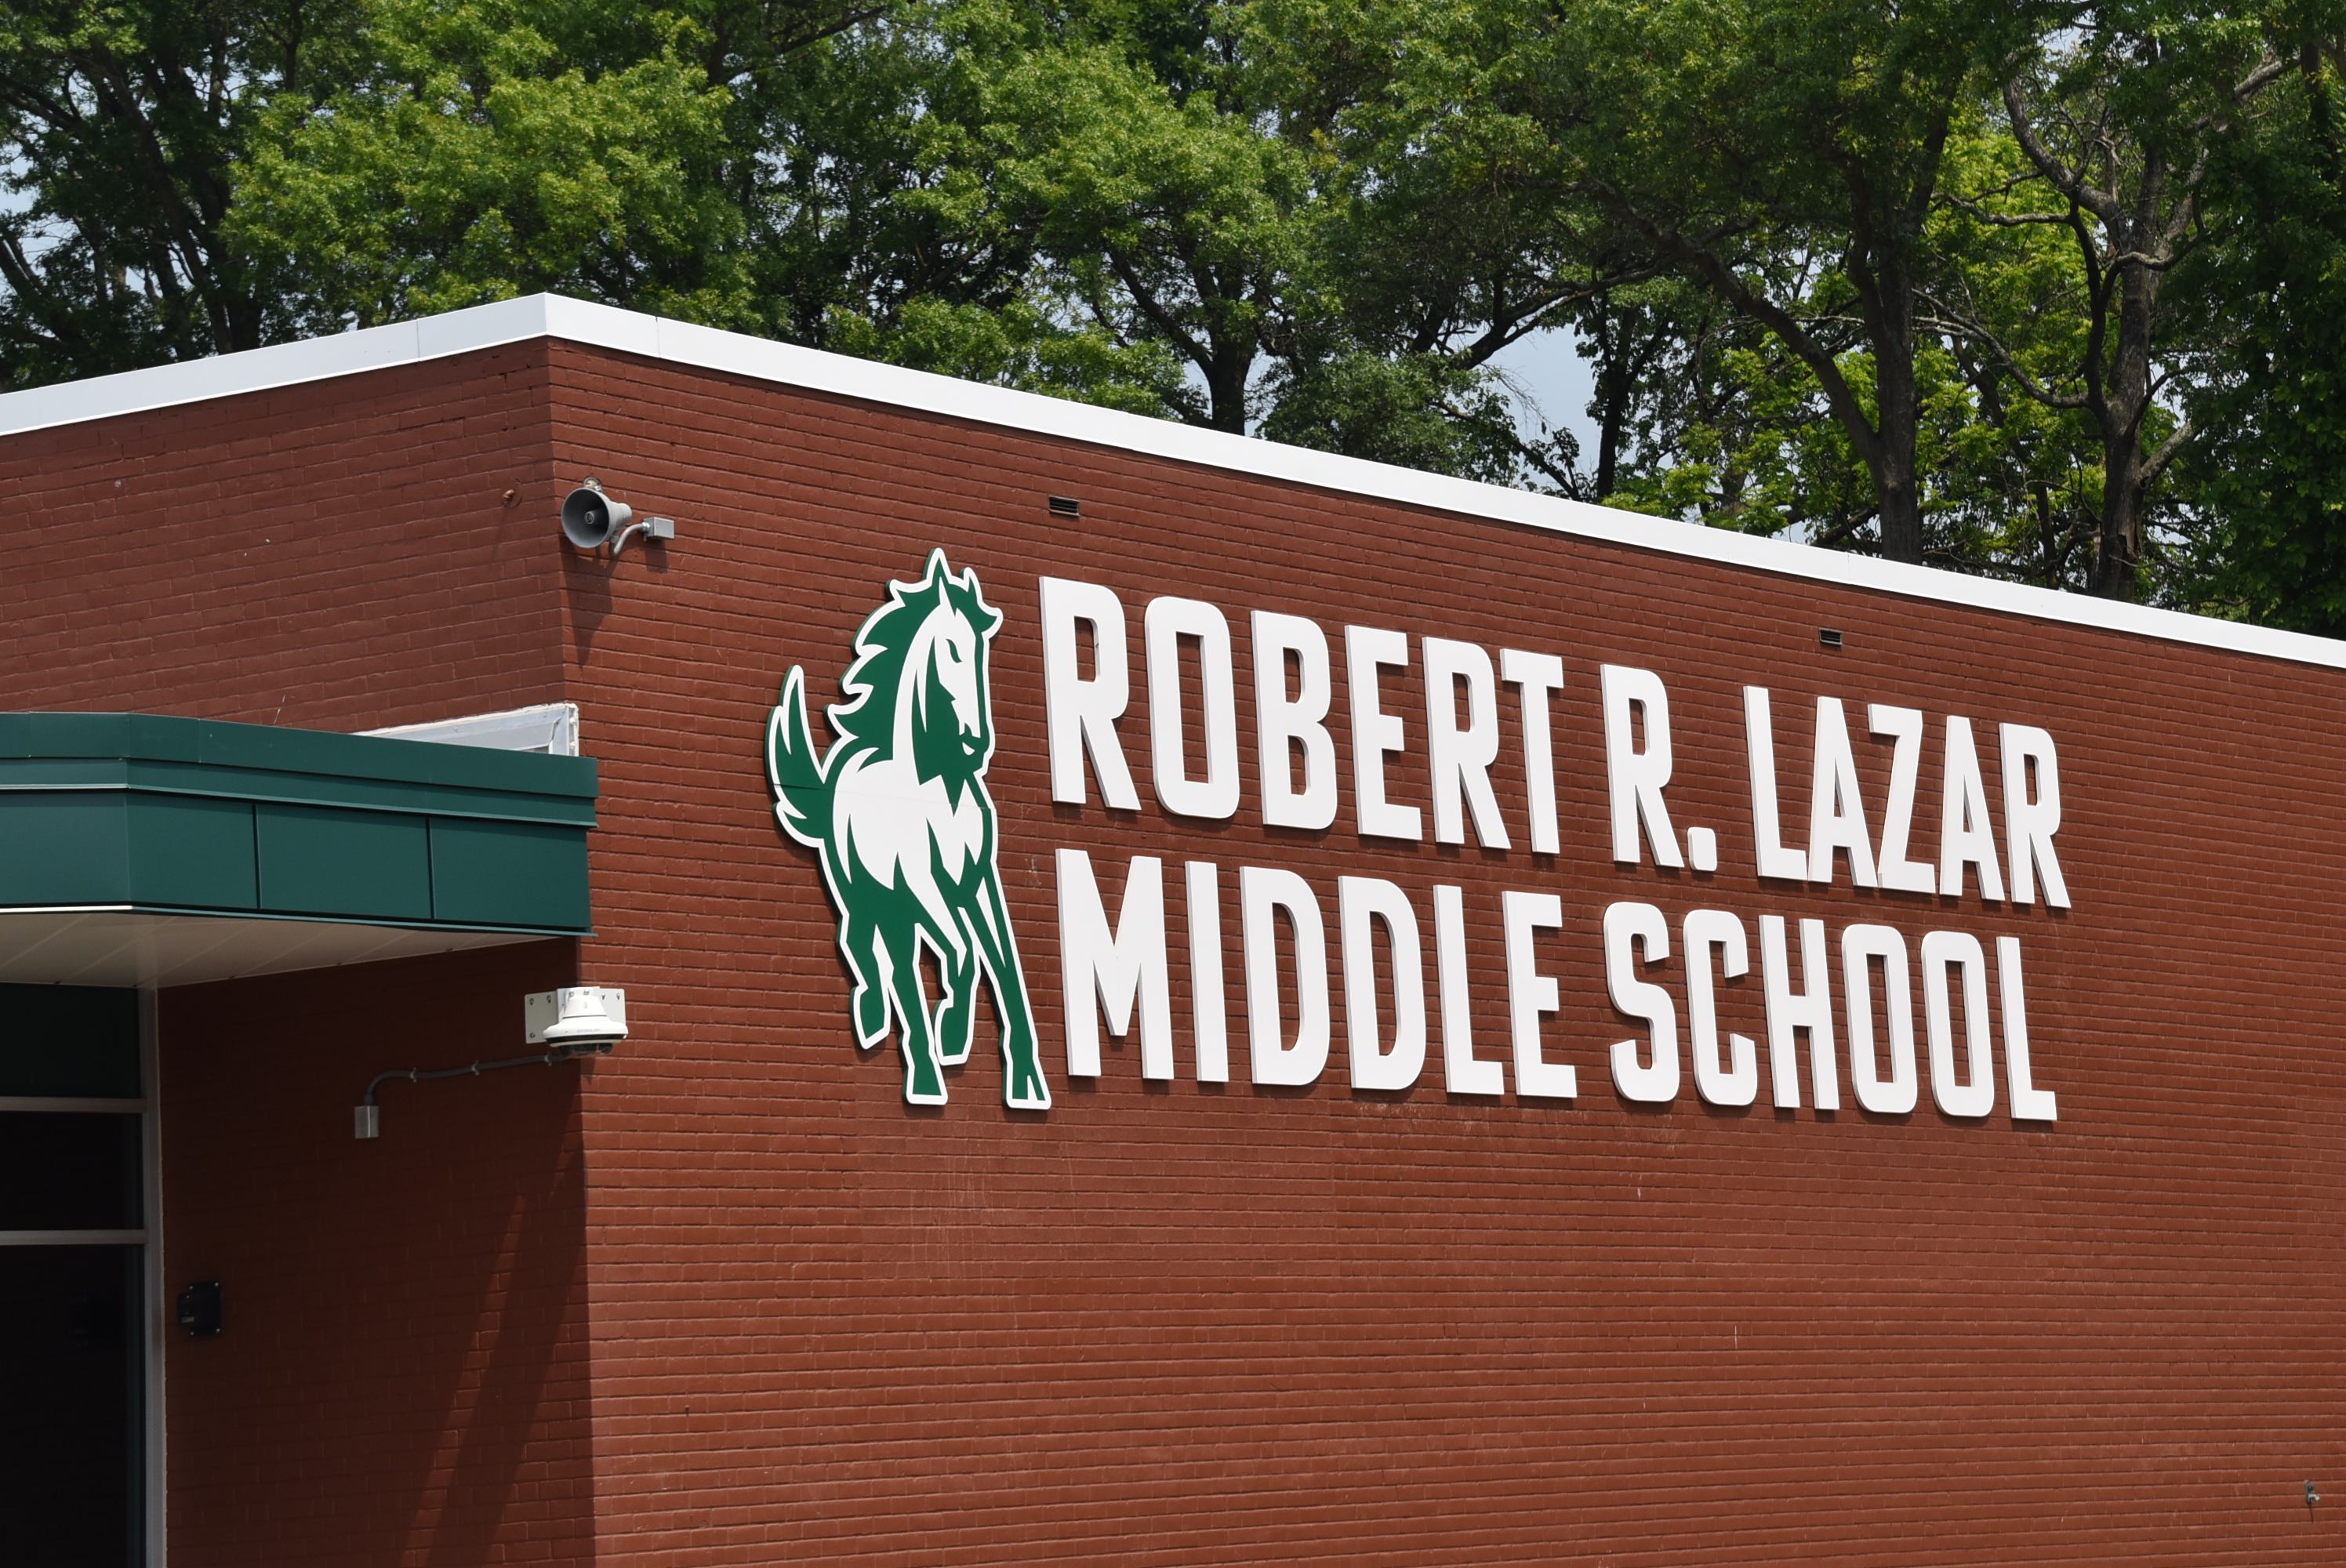 Robert R. Lazar Middle School building